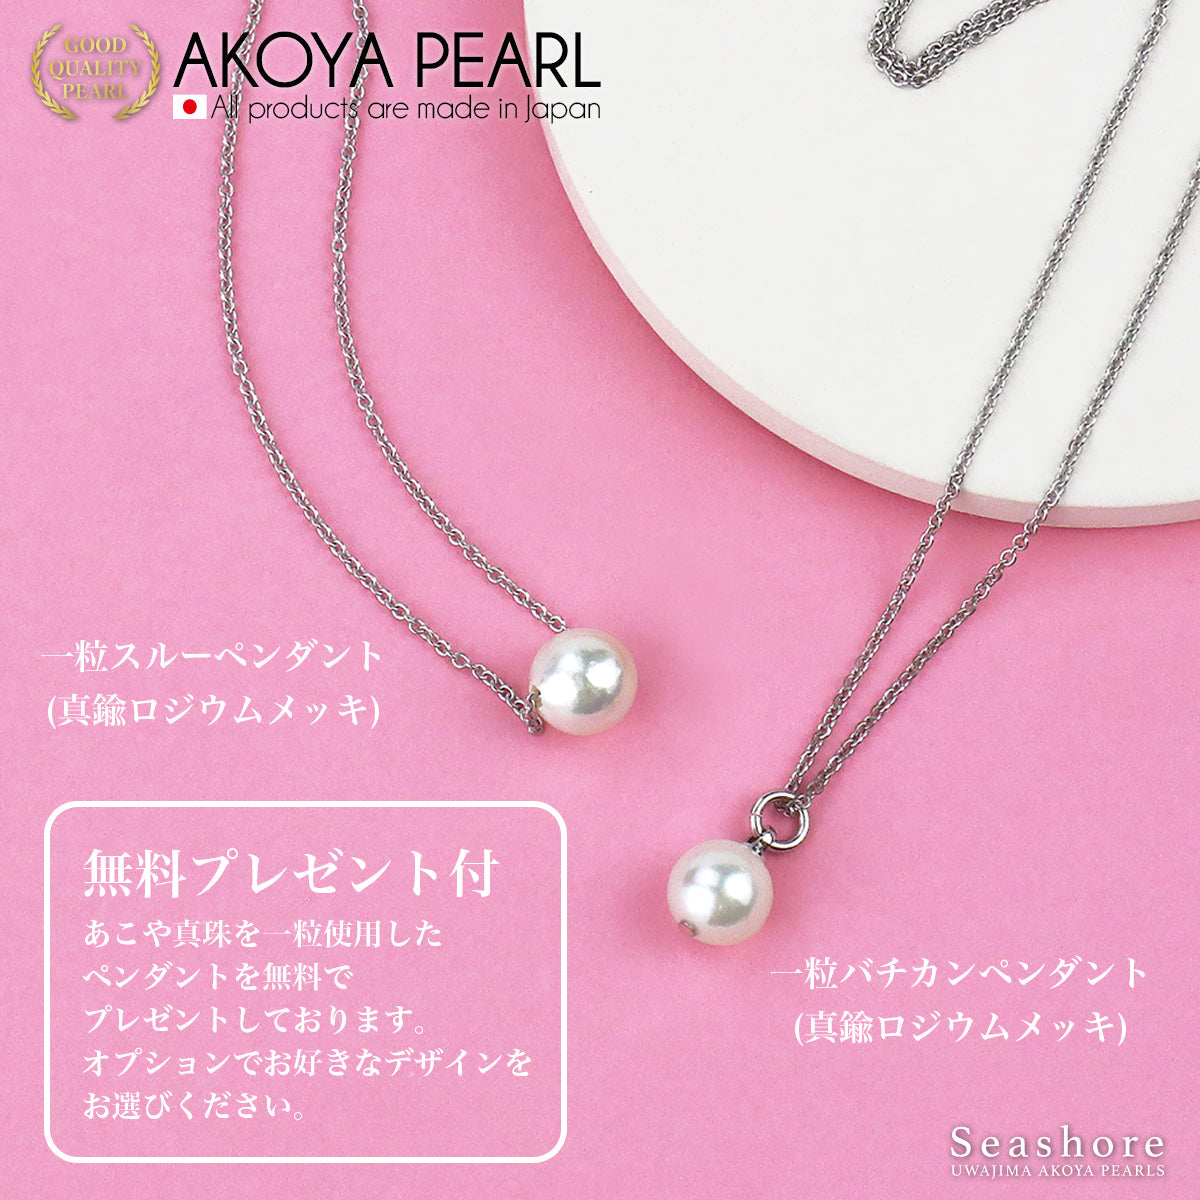 Akoya 珍珠项链 1 条 [6.5-7.0mm] SV925 含调节器 含身份证书 含纸板箱 (4031)